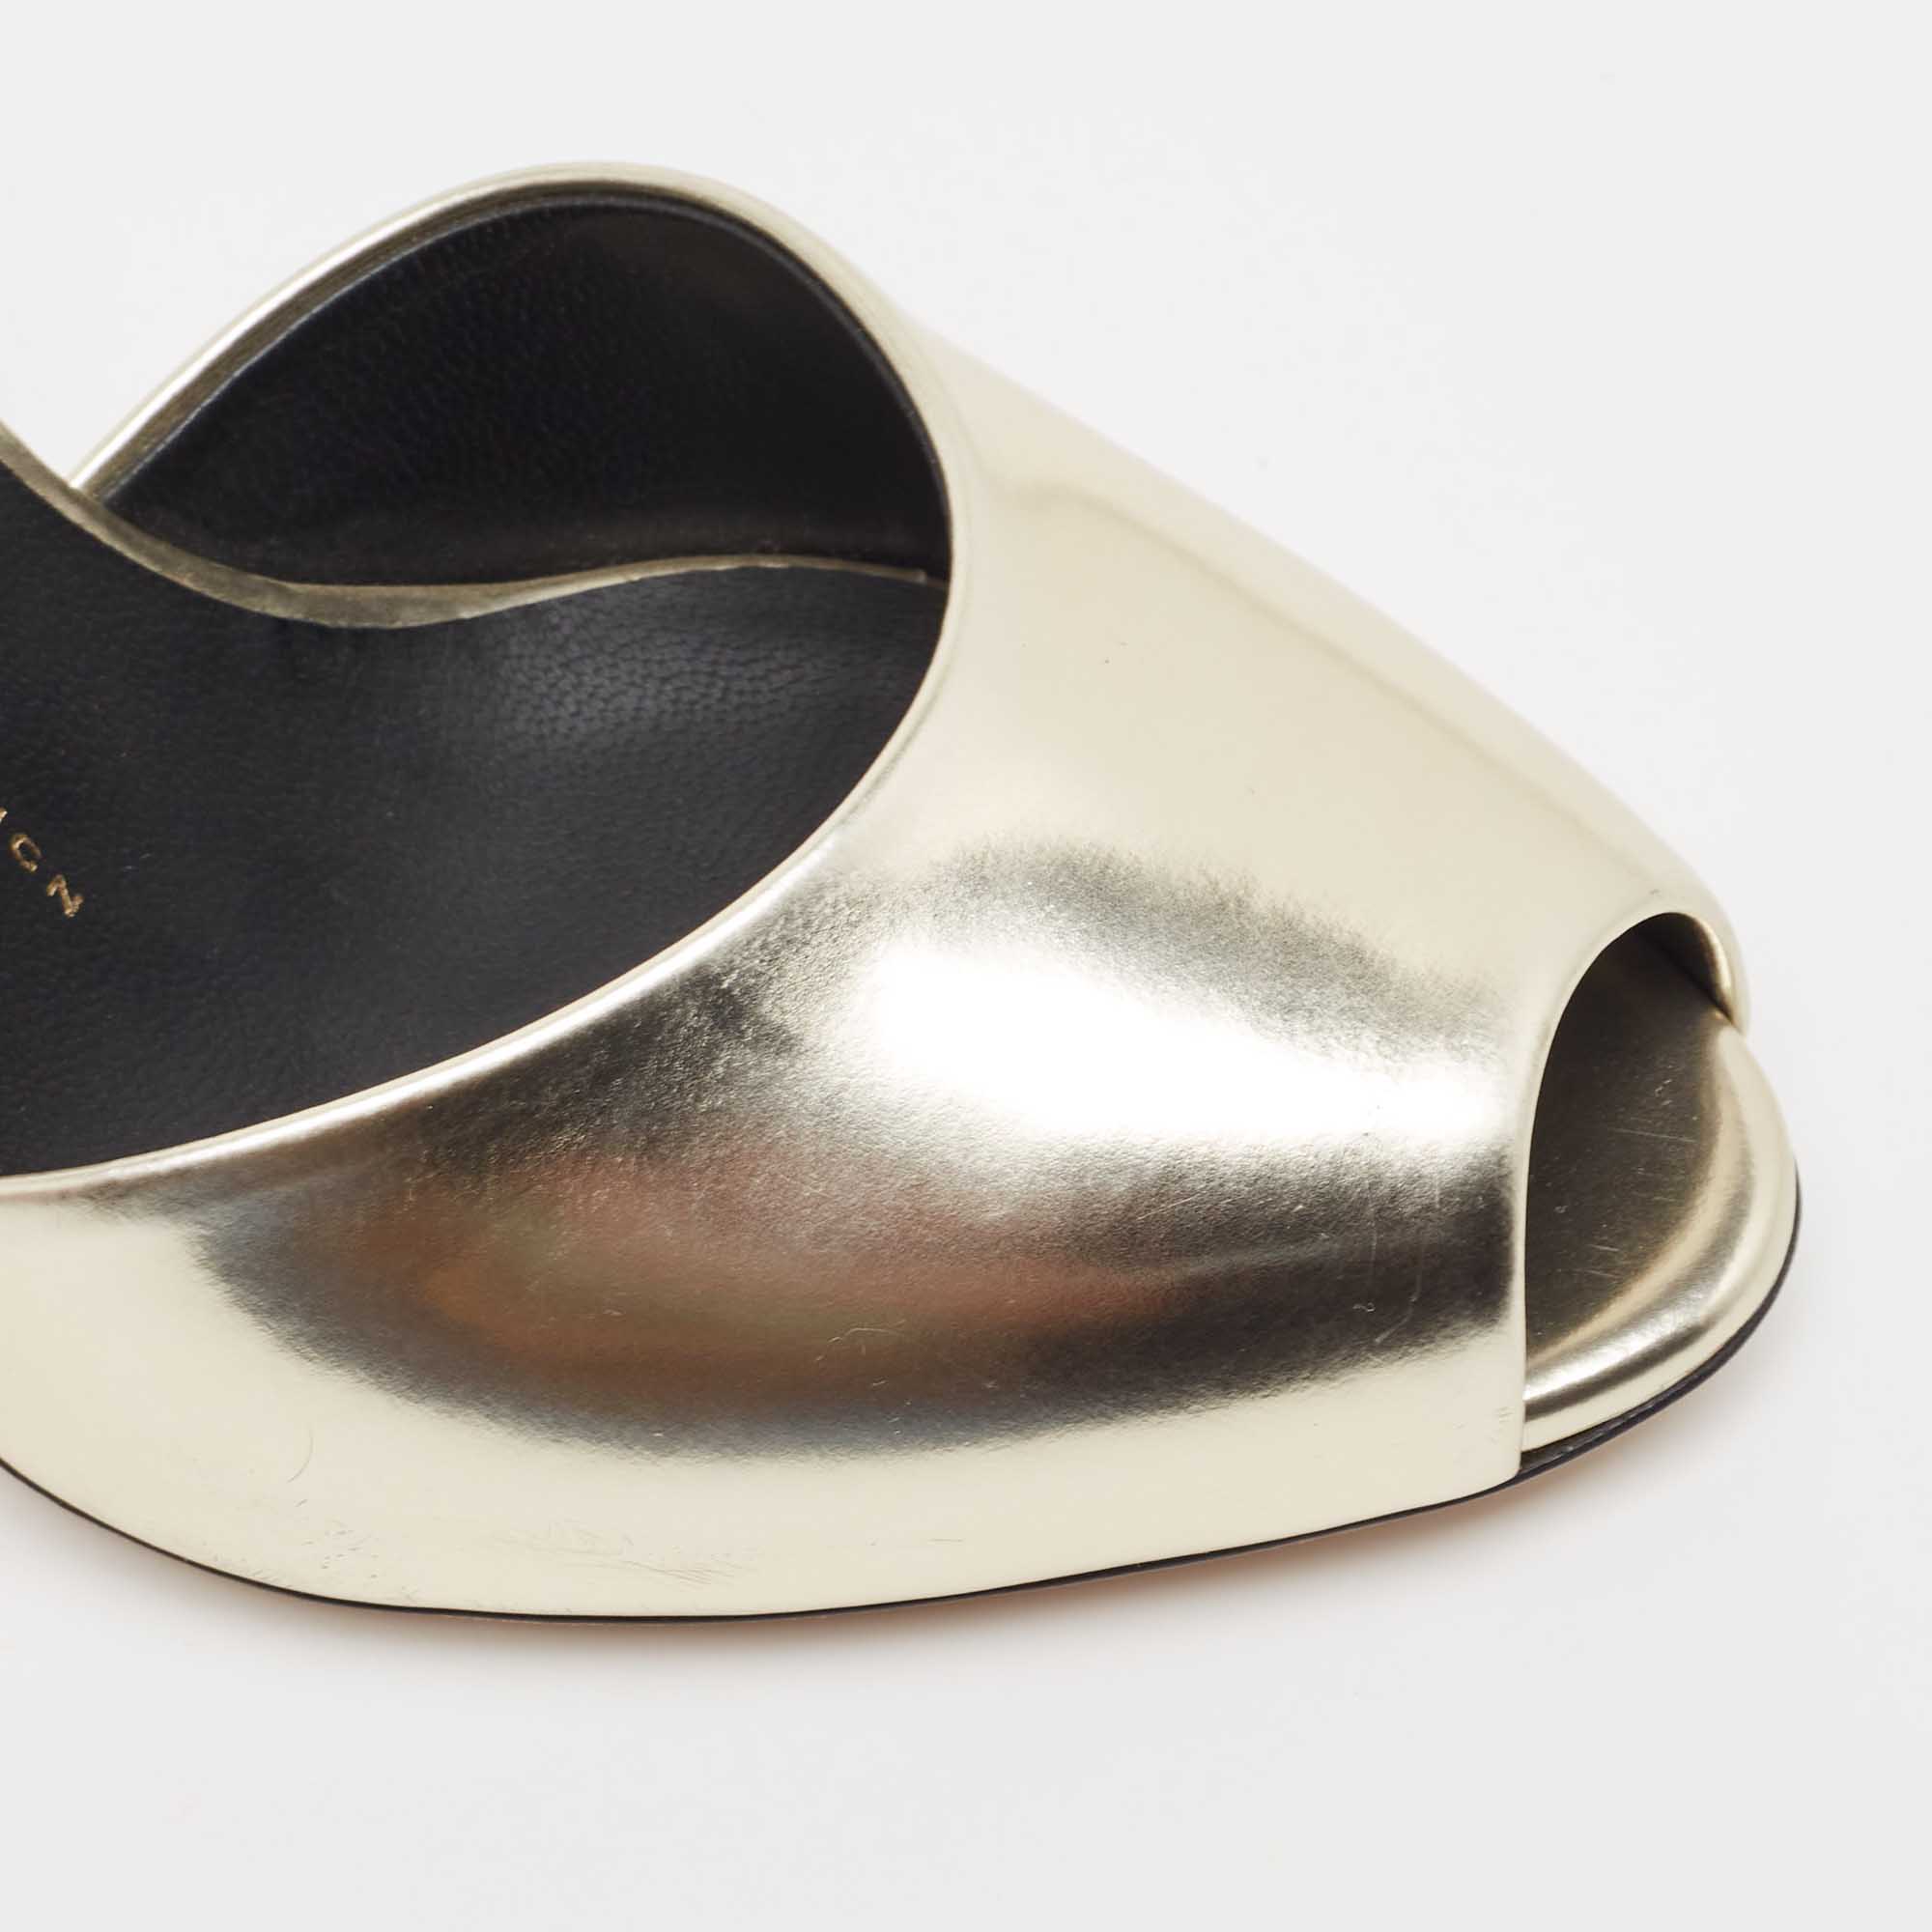 Giuseppe Zanotti Gold Leather Slide Sandals Size 38